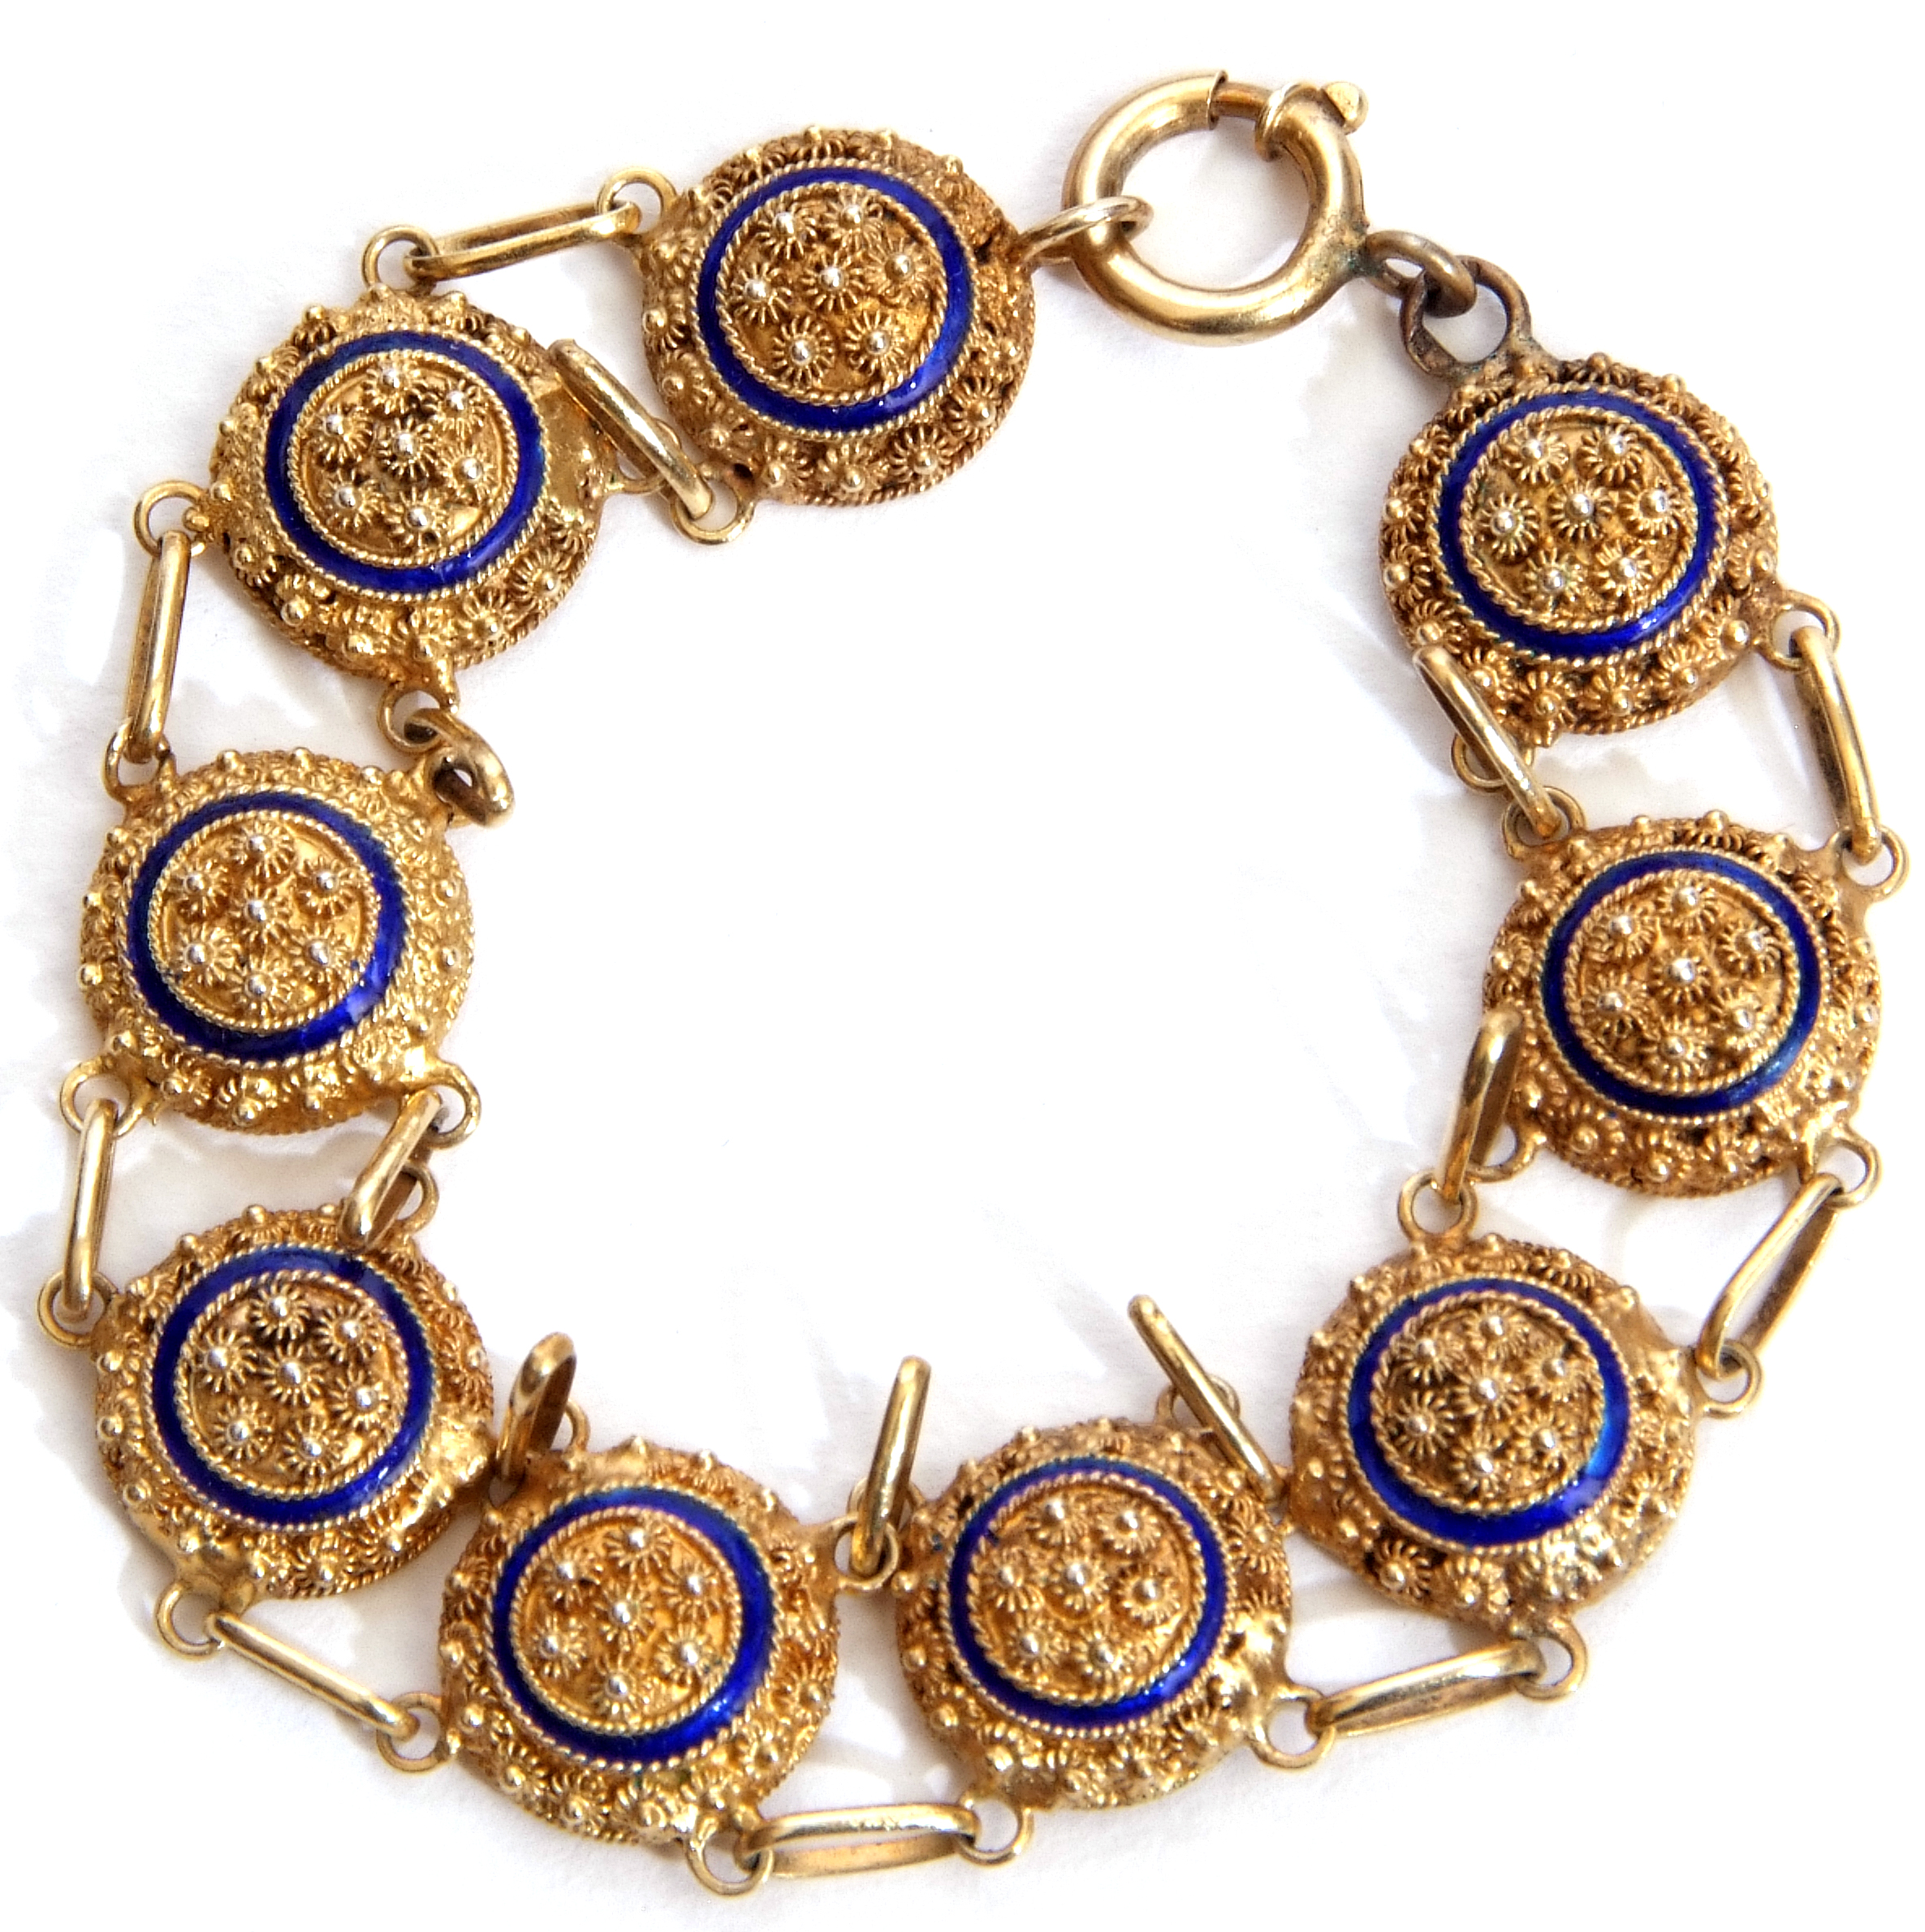 Vintage Portuguese silver gilt and enamel bracelet, a design featuring nine joined circular filigree